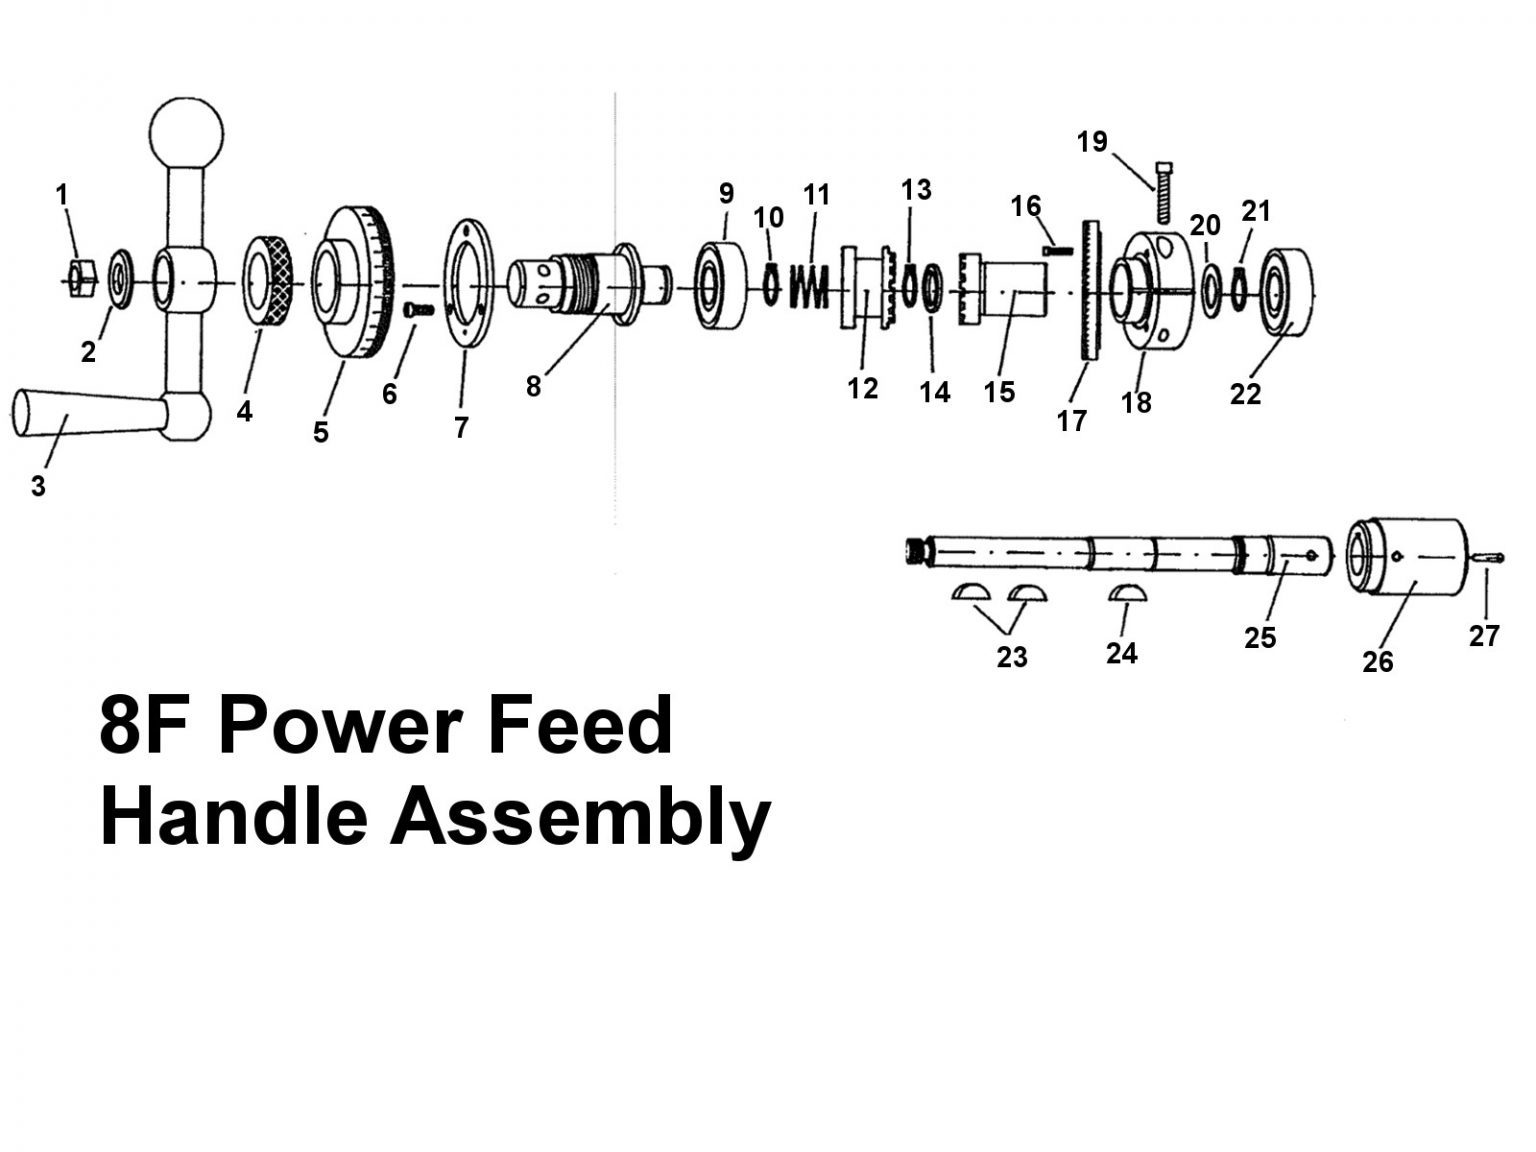 8F Power Feed Handle Assembly Breakdown